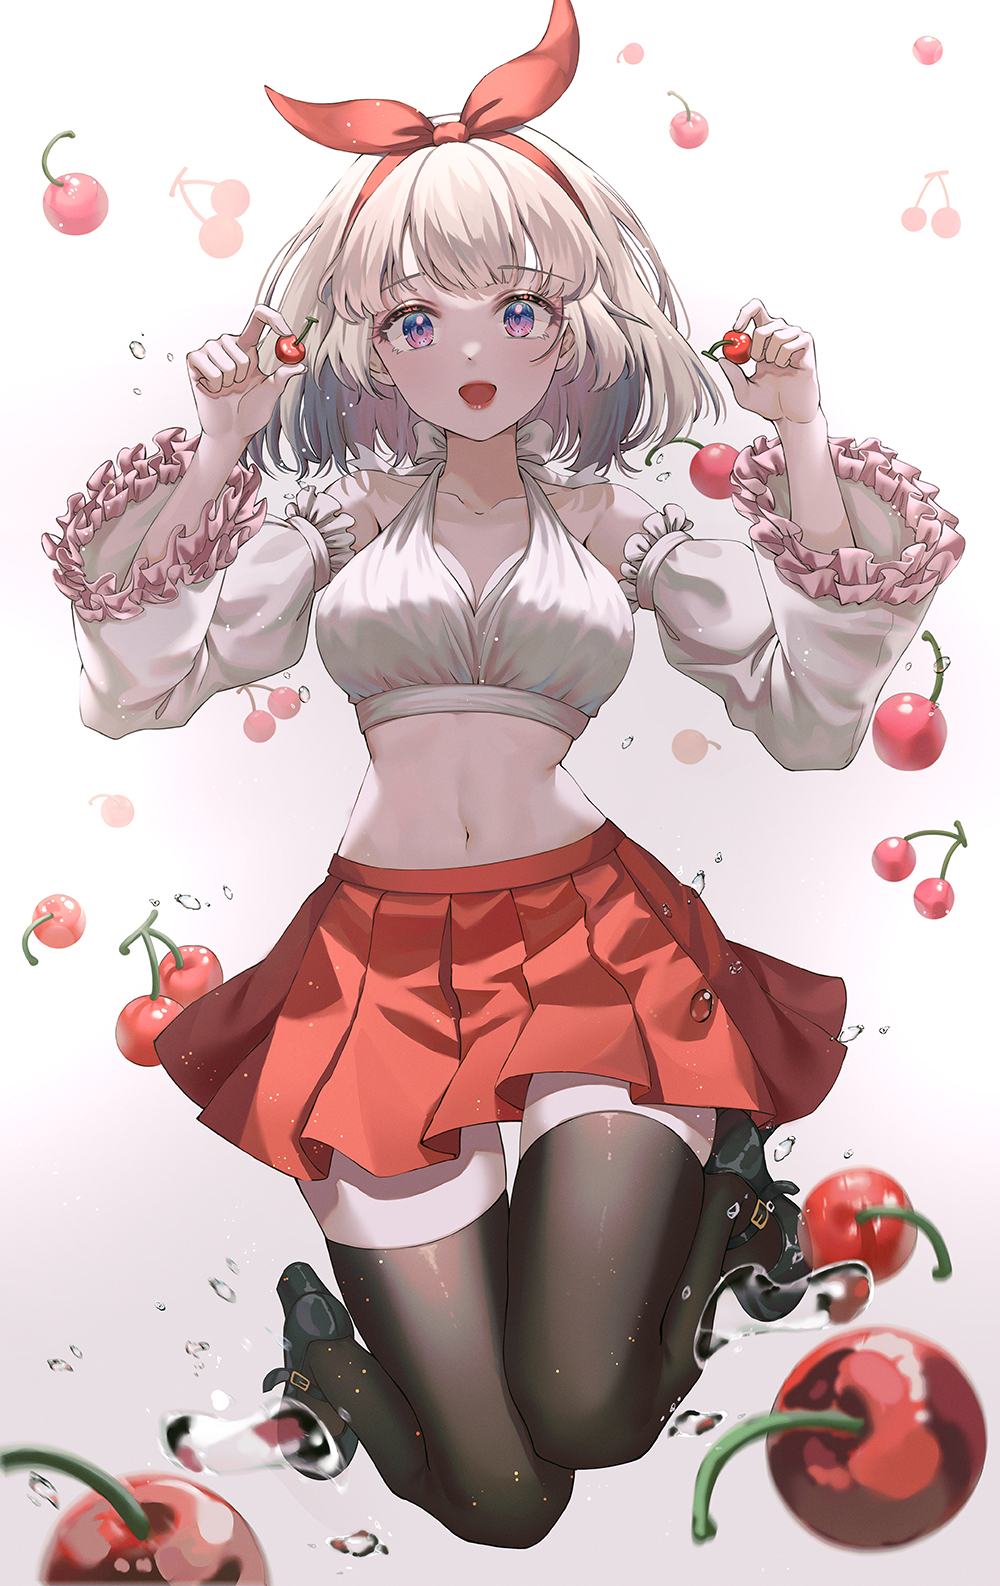 Anime 1000x1586 anime girls anime digital art artwork looking at viewer 2D belly belly button portrait portrait display ecchi skirt fruit cherries